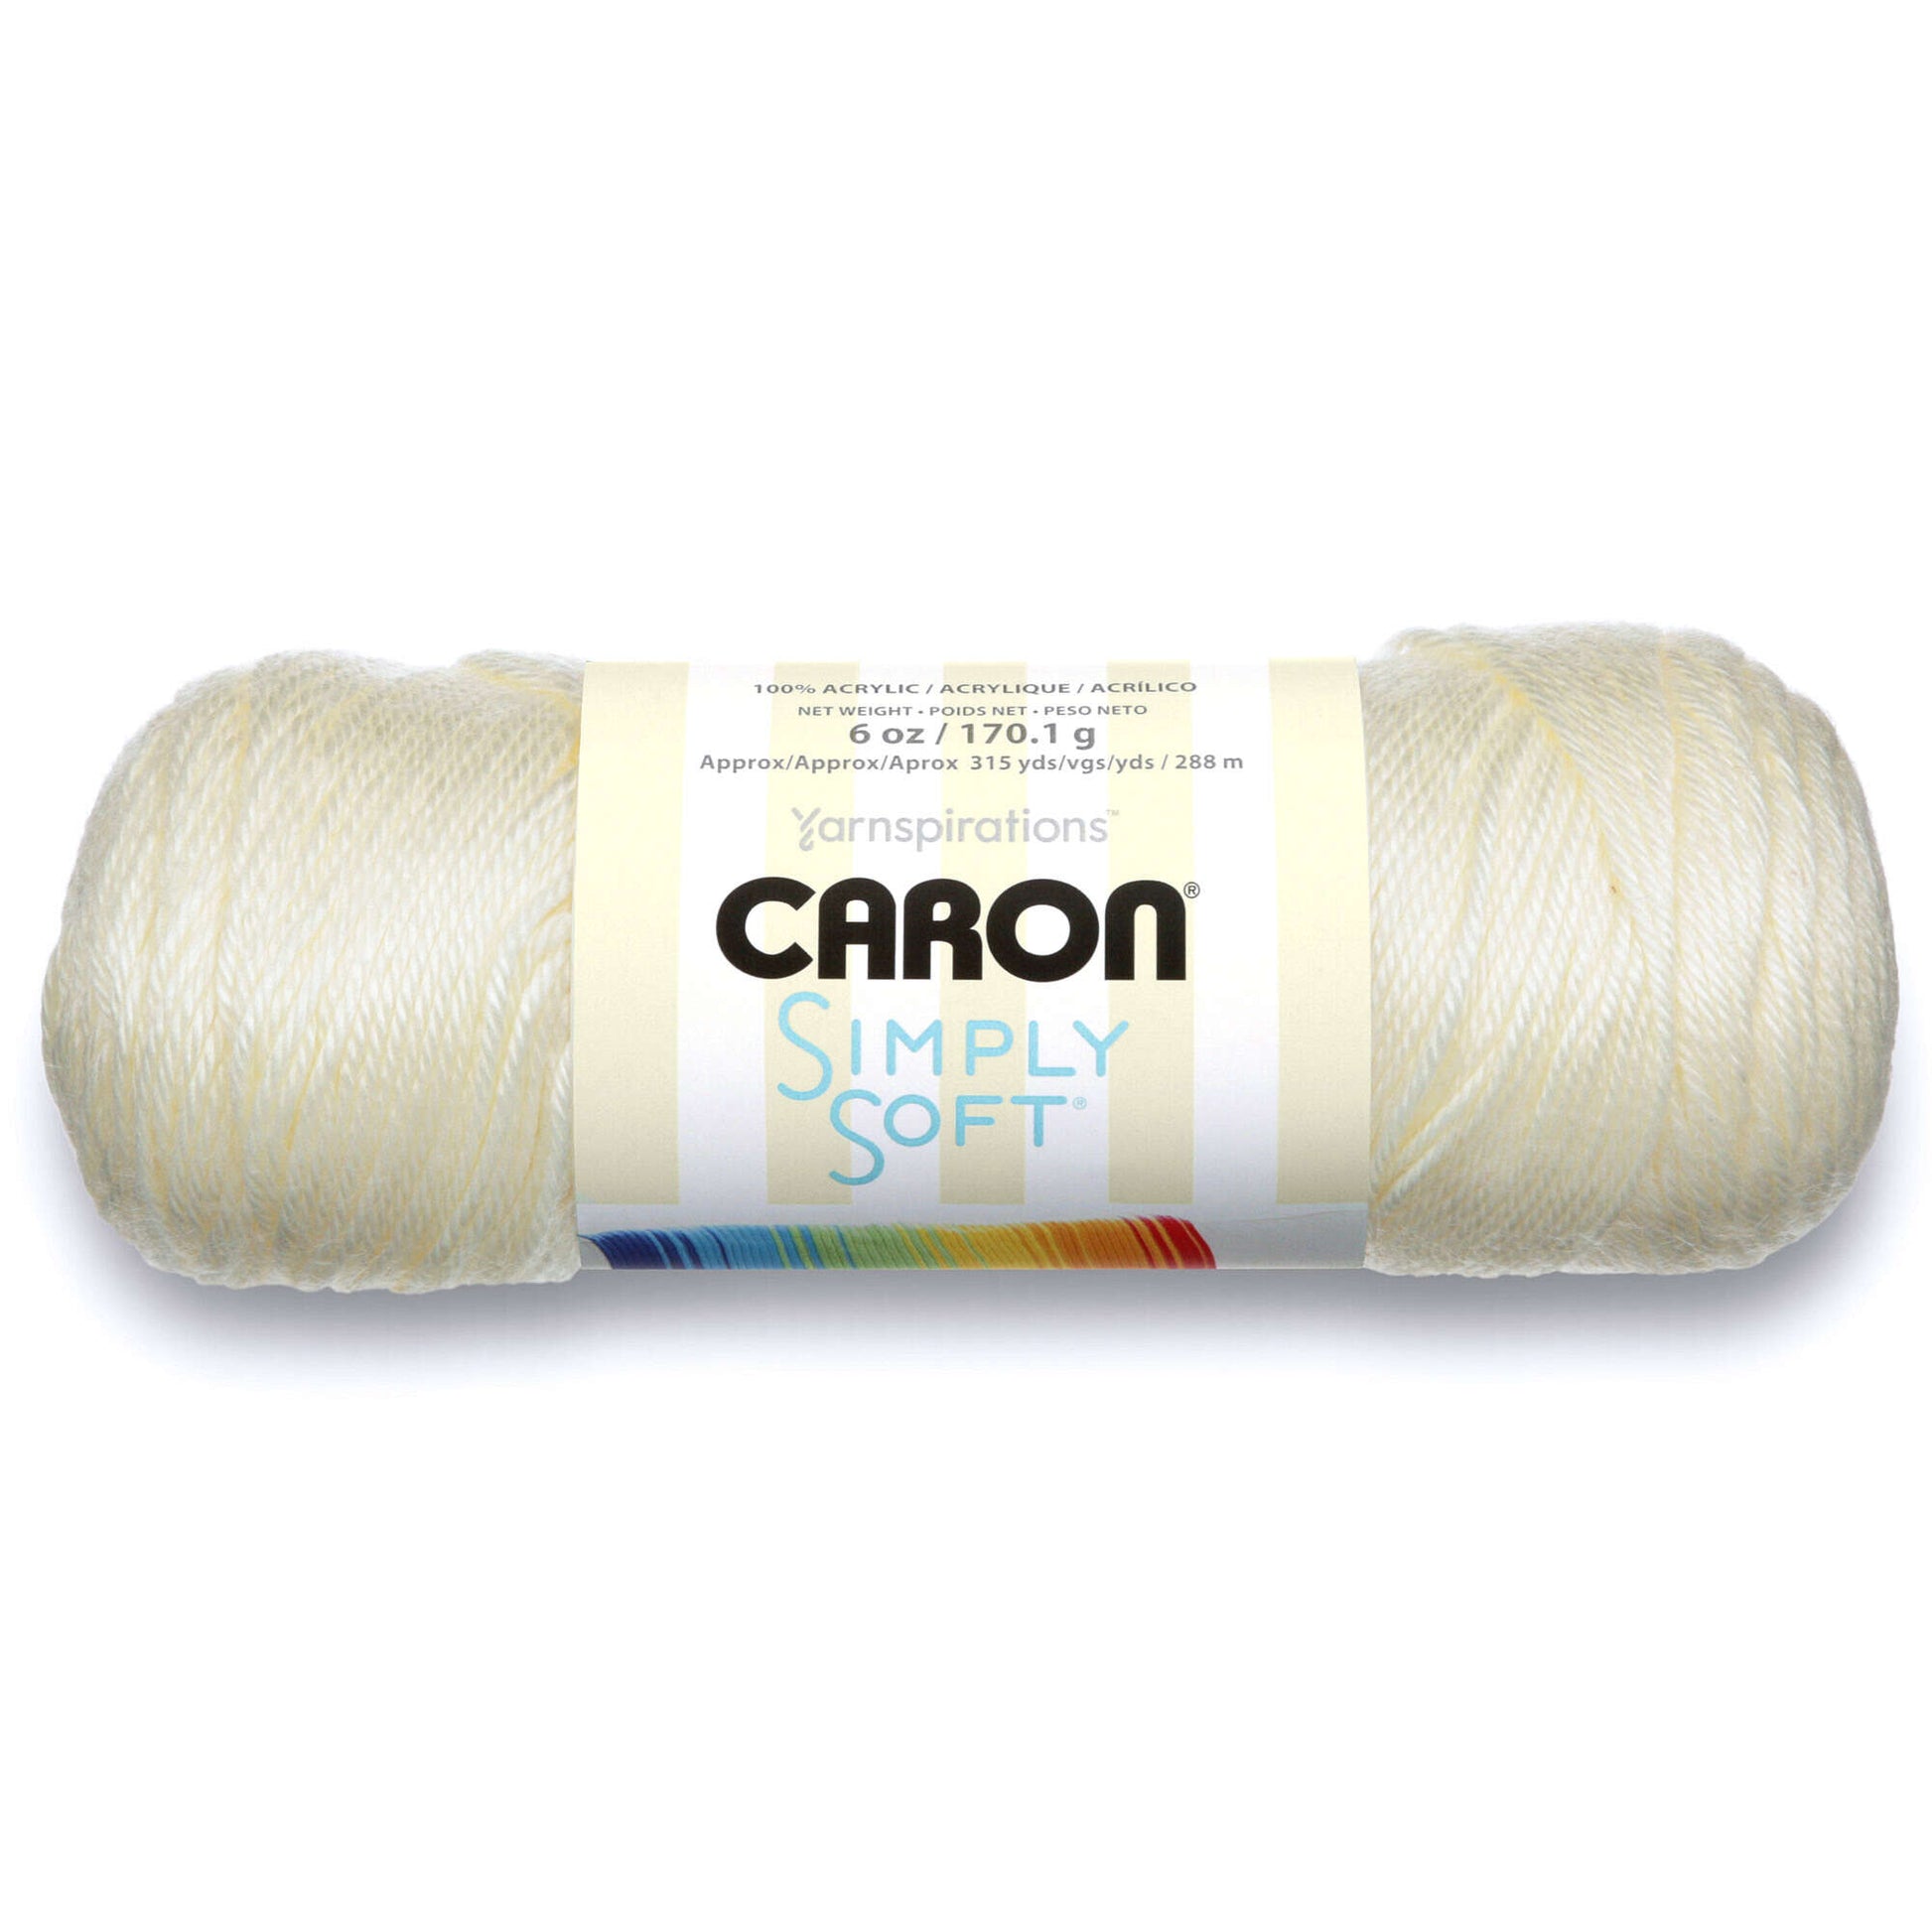 CARON SIMPLY SOFT yarn.1pk.IRIS. I Combine Shipping, see details. - Tony's  Restaurant in Alton, IL